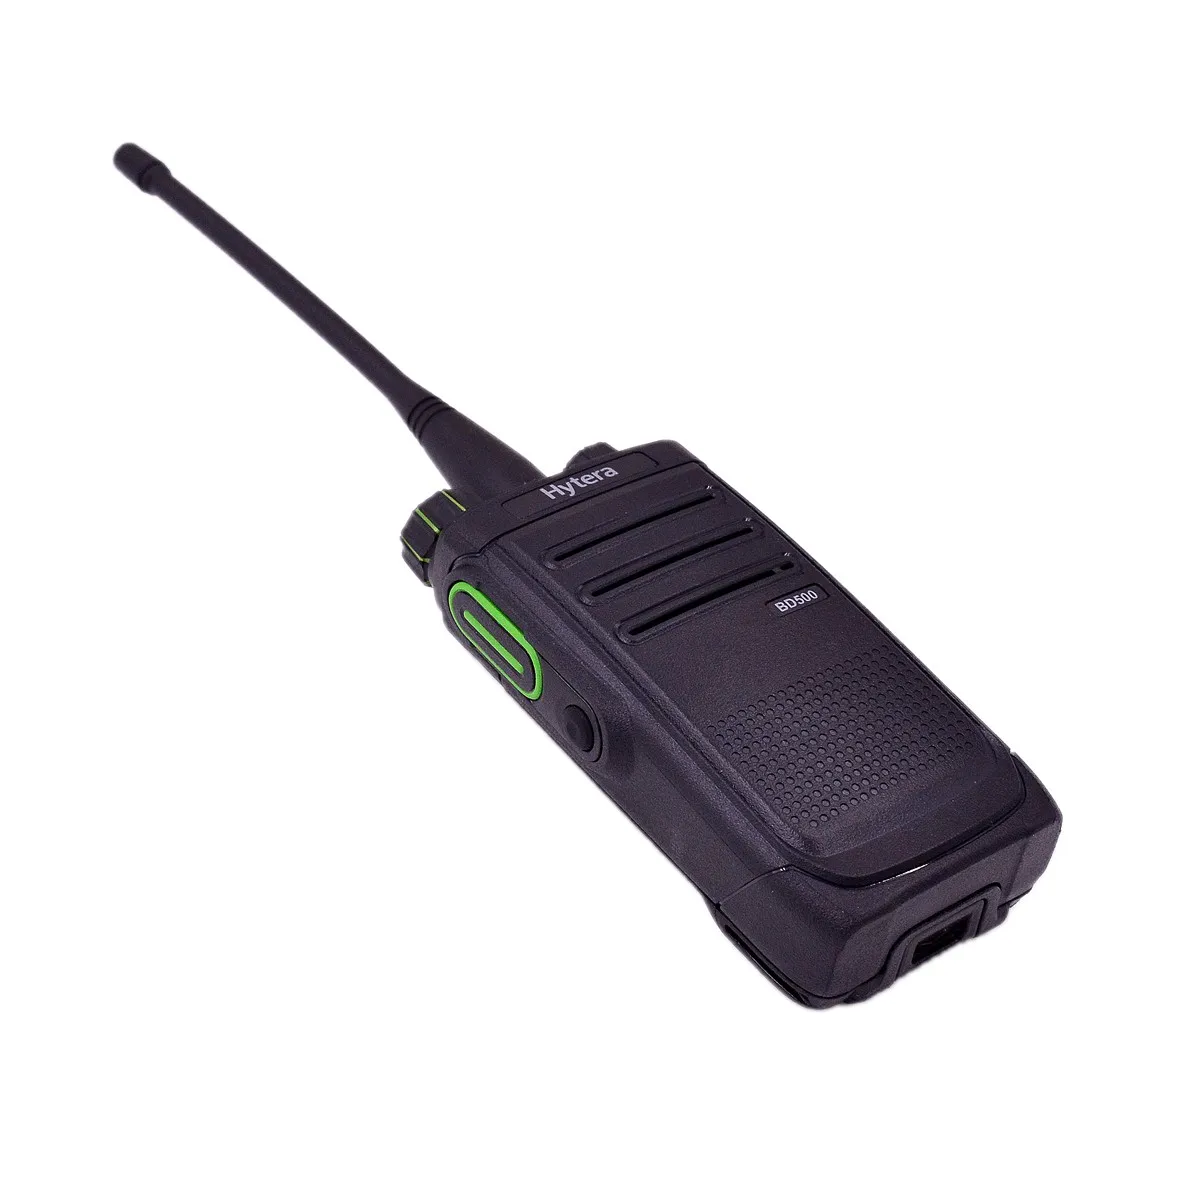 HYT BD500 Business Digital Singal Walkie Talkie DMR  Analog Dual Time Slot VHF  UHF Wireless Transeciver FM Radio Scan Receiver